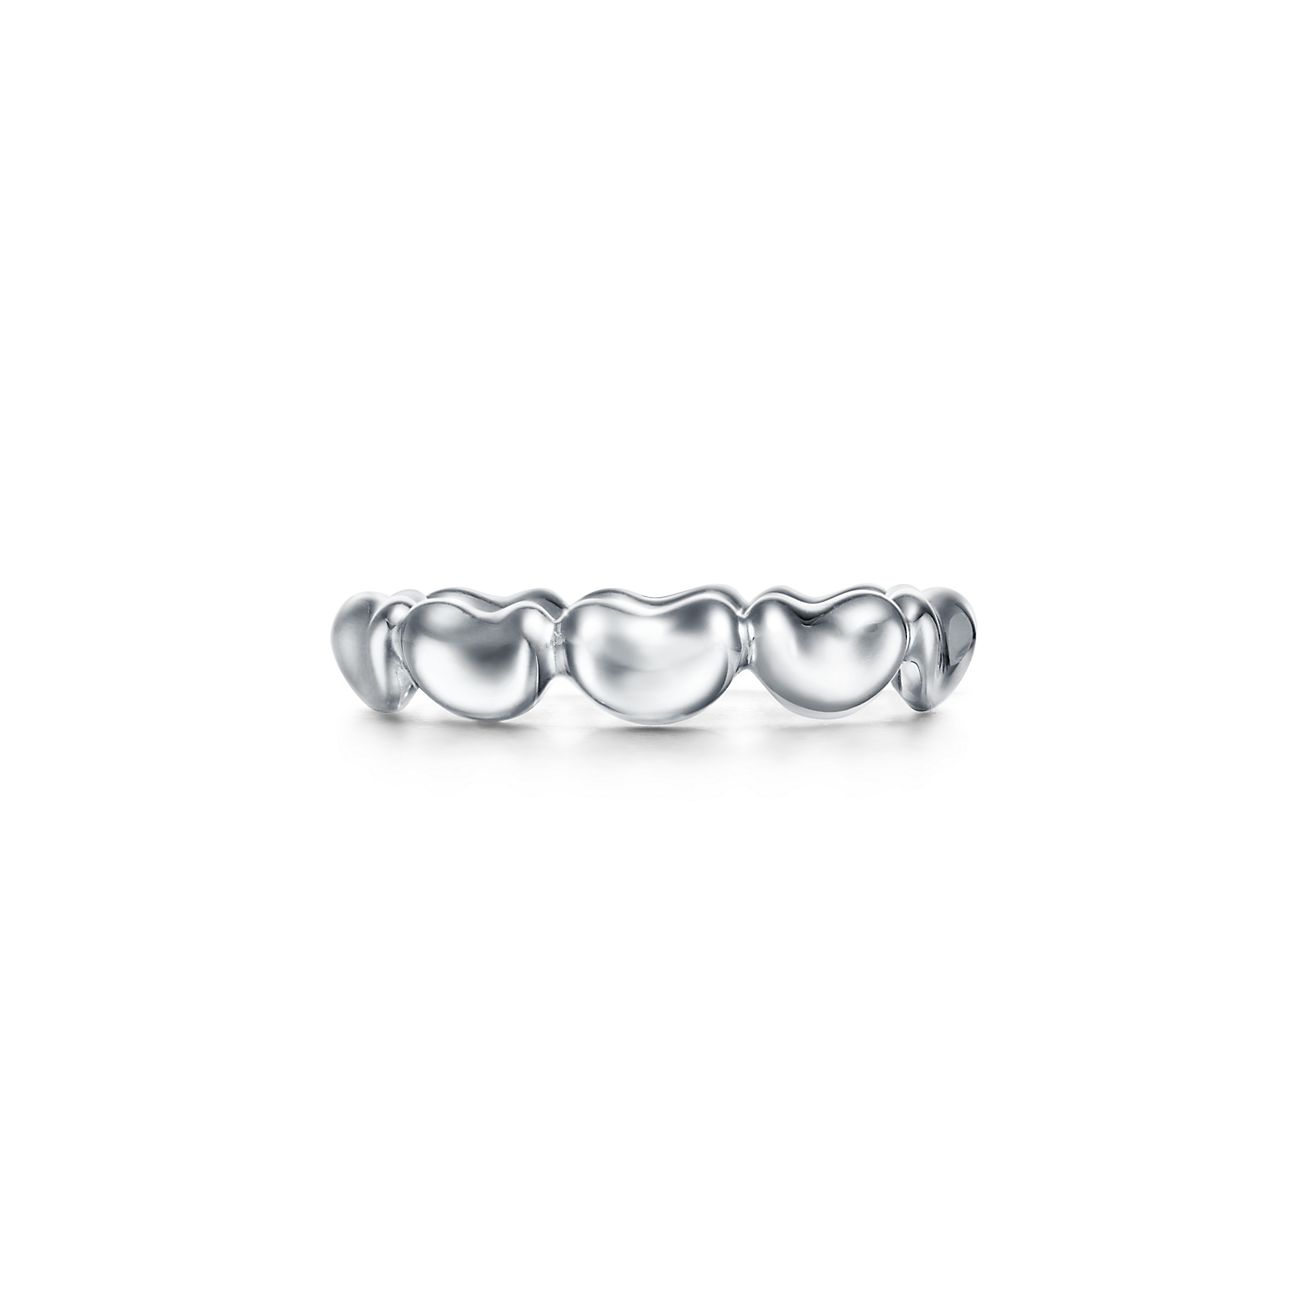 Bague Bean Design Elsa Peretti motif continu en argent 925 millièmes - Size 8 Tiffany & Co.